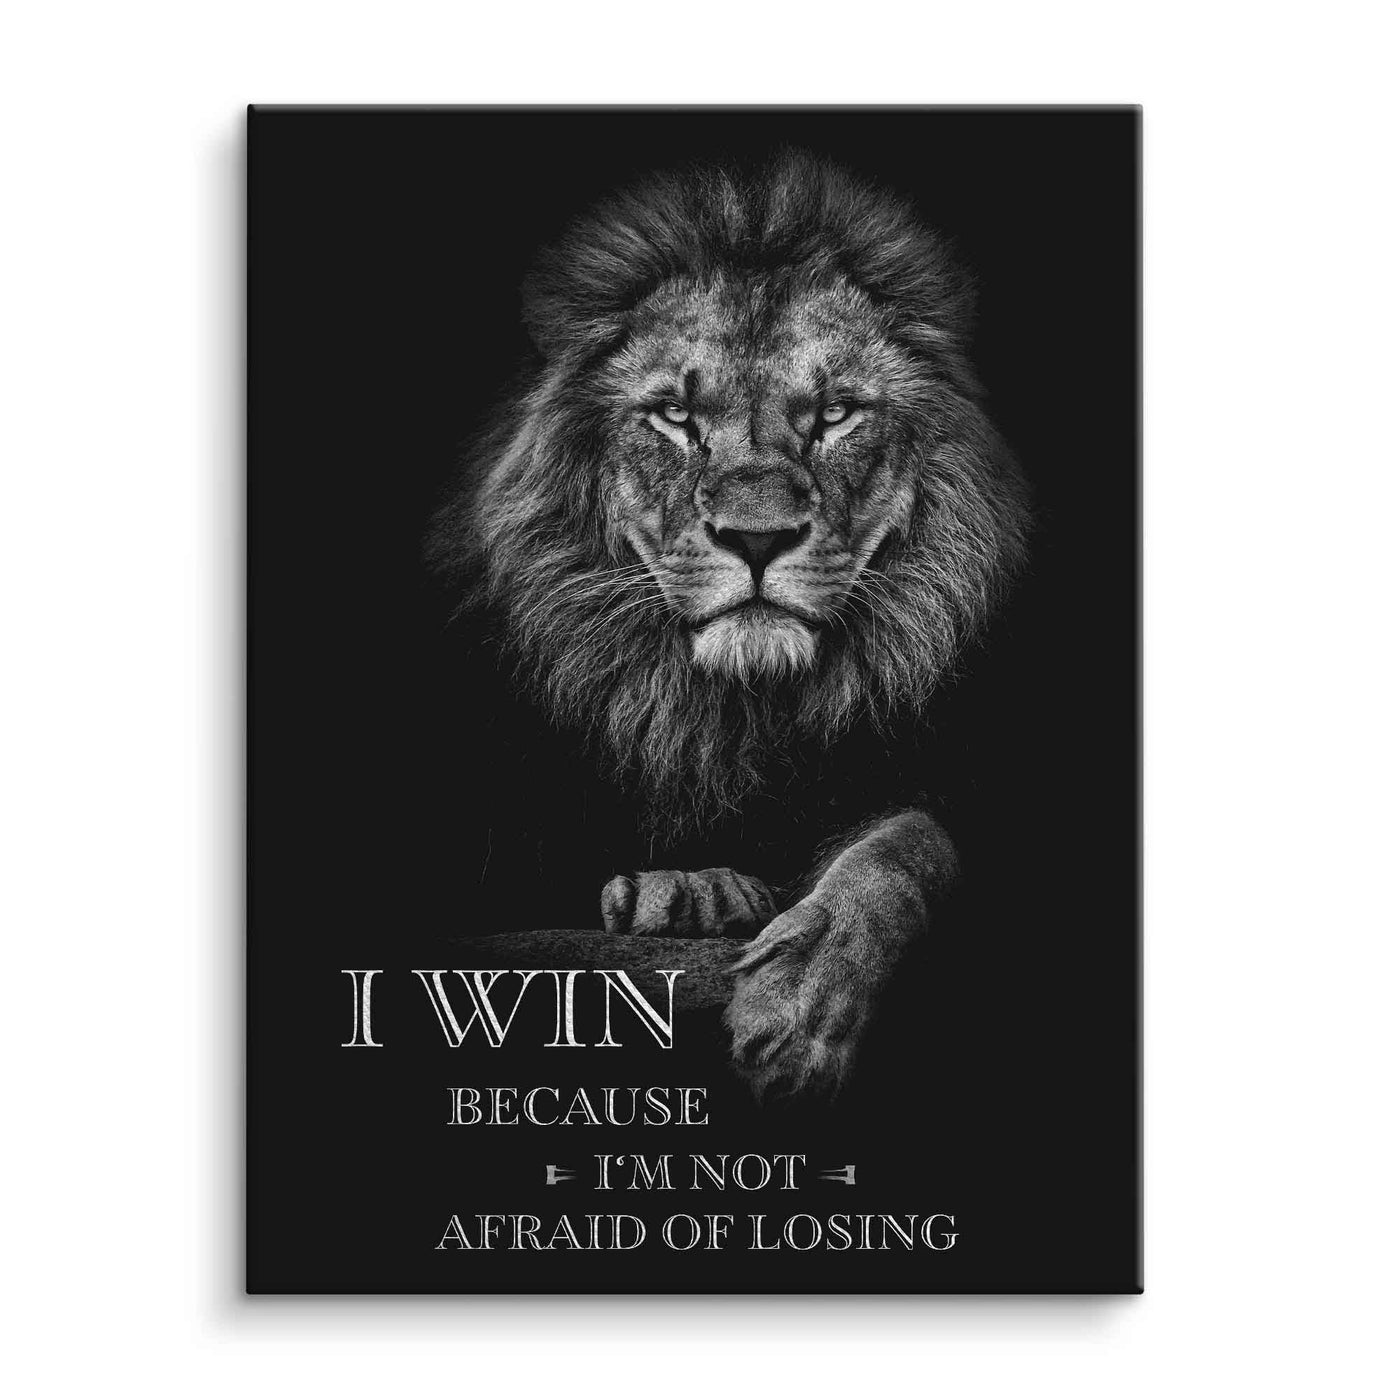 I win - not afraid of losing